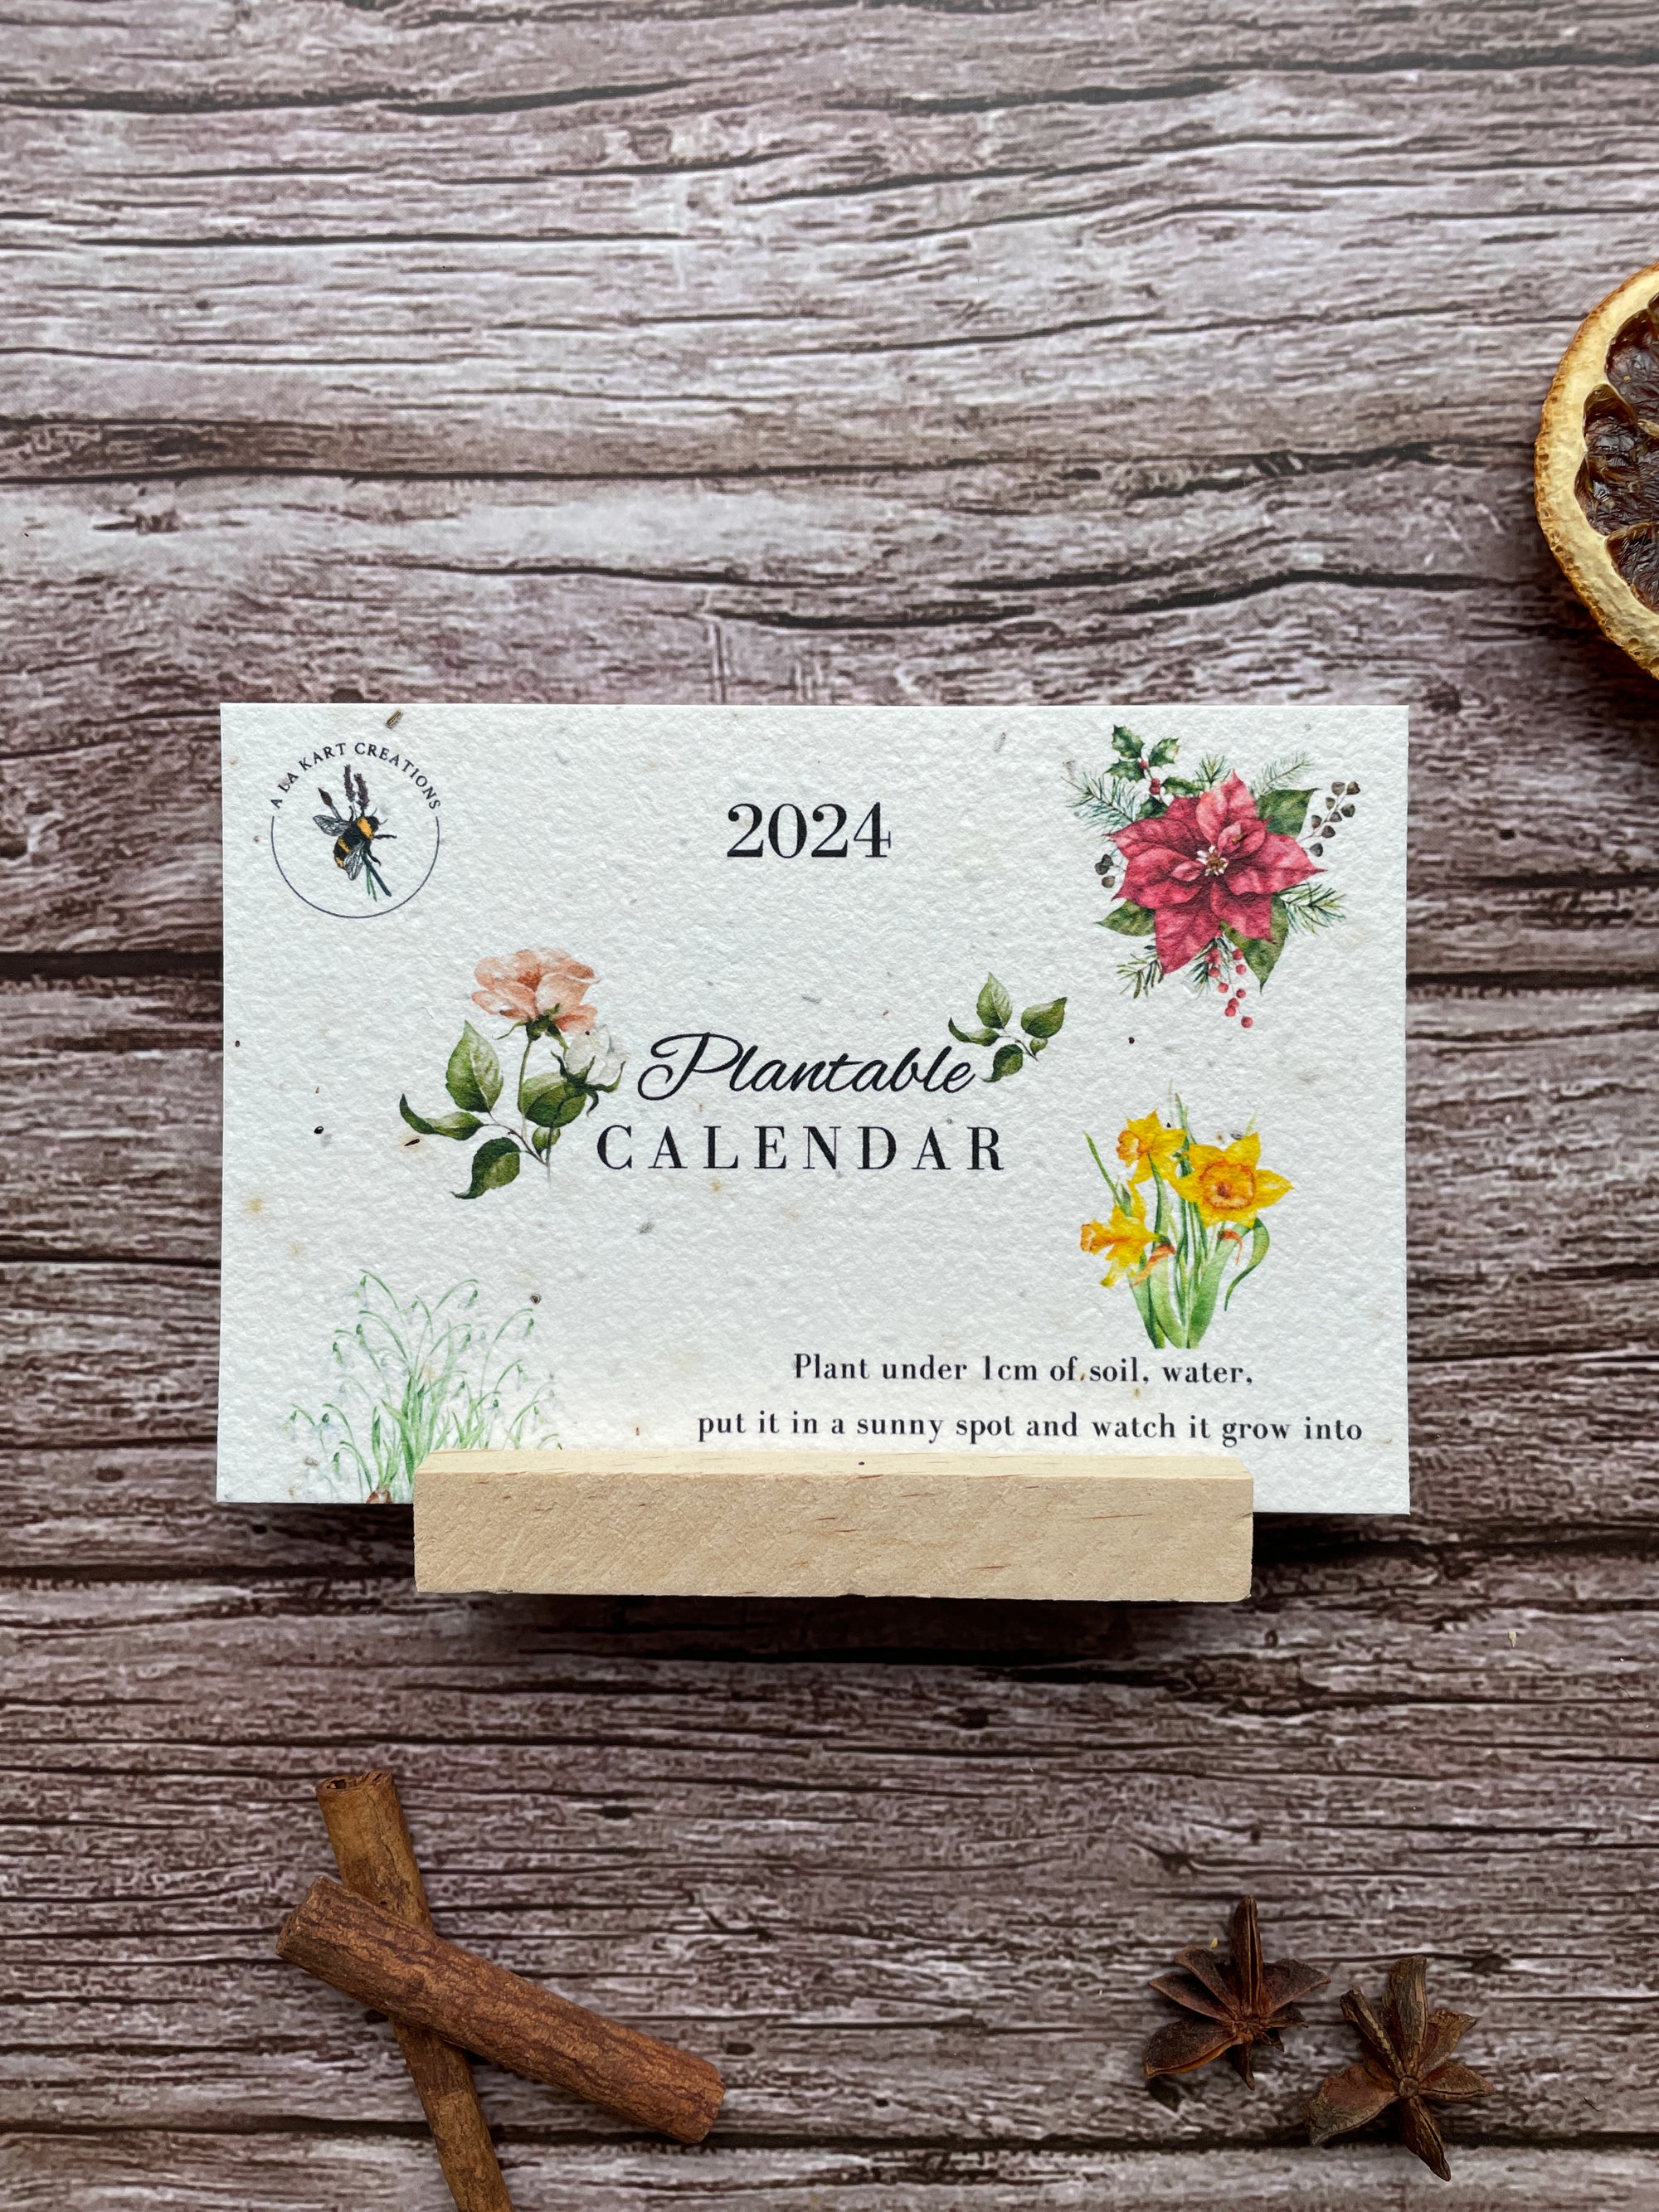 2024 Plantable Calendar - 4 Seasons